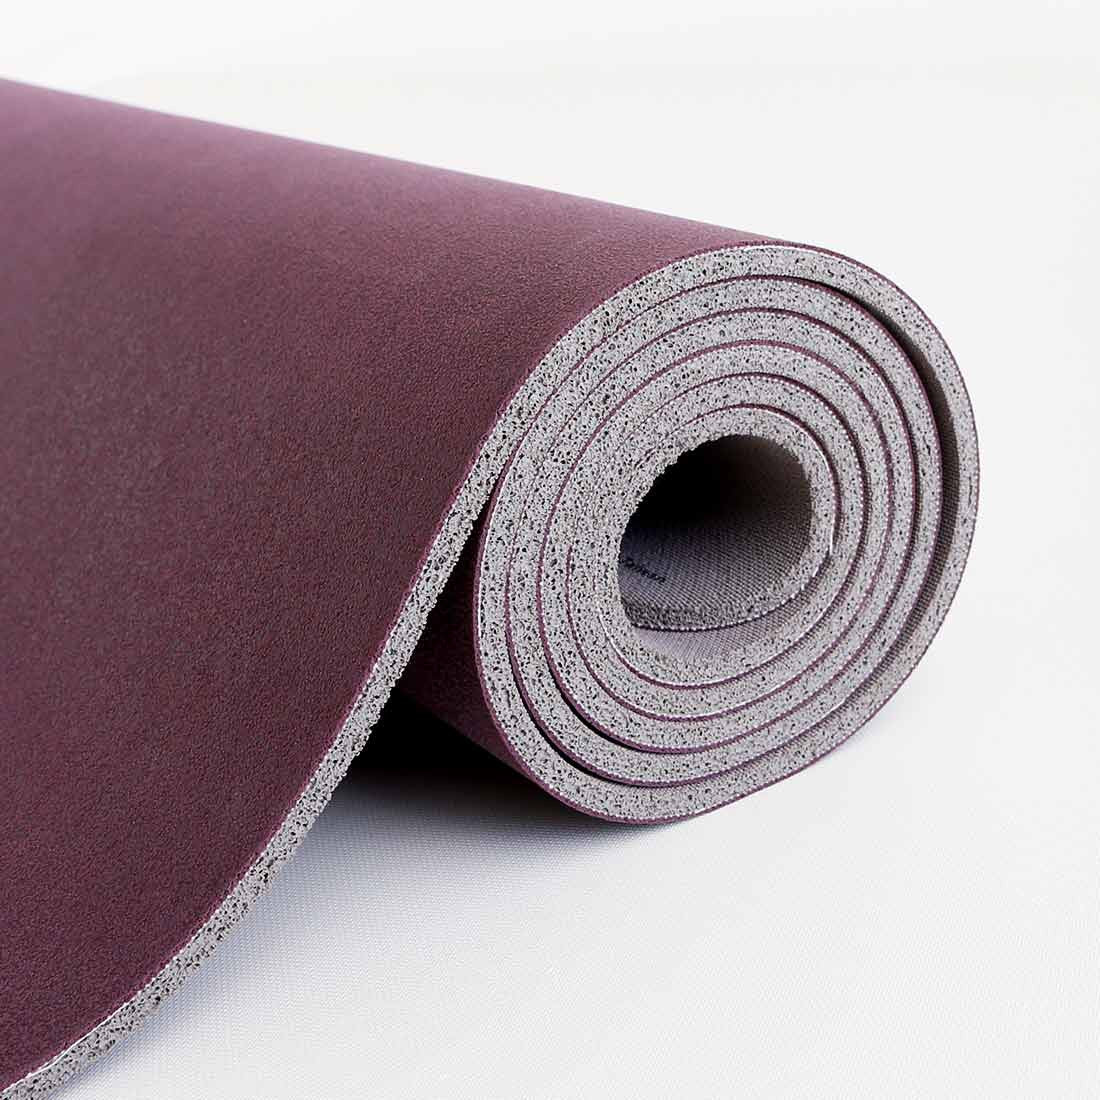 easyoga Premium Natural Rubber Yoga Mat - P7 Dark Purple / Light Purple